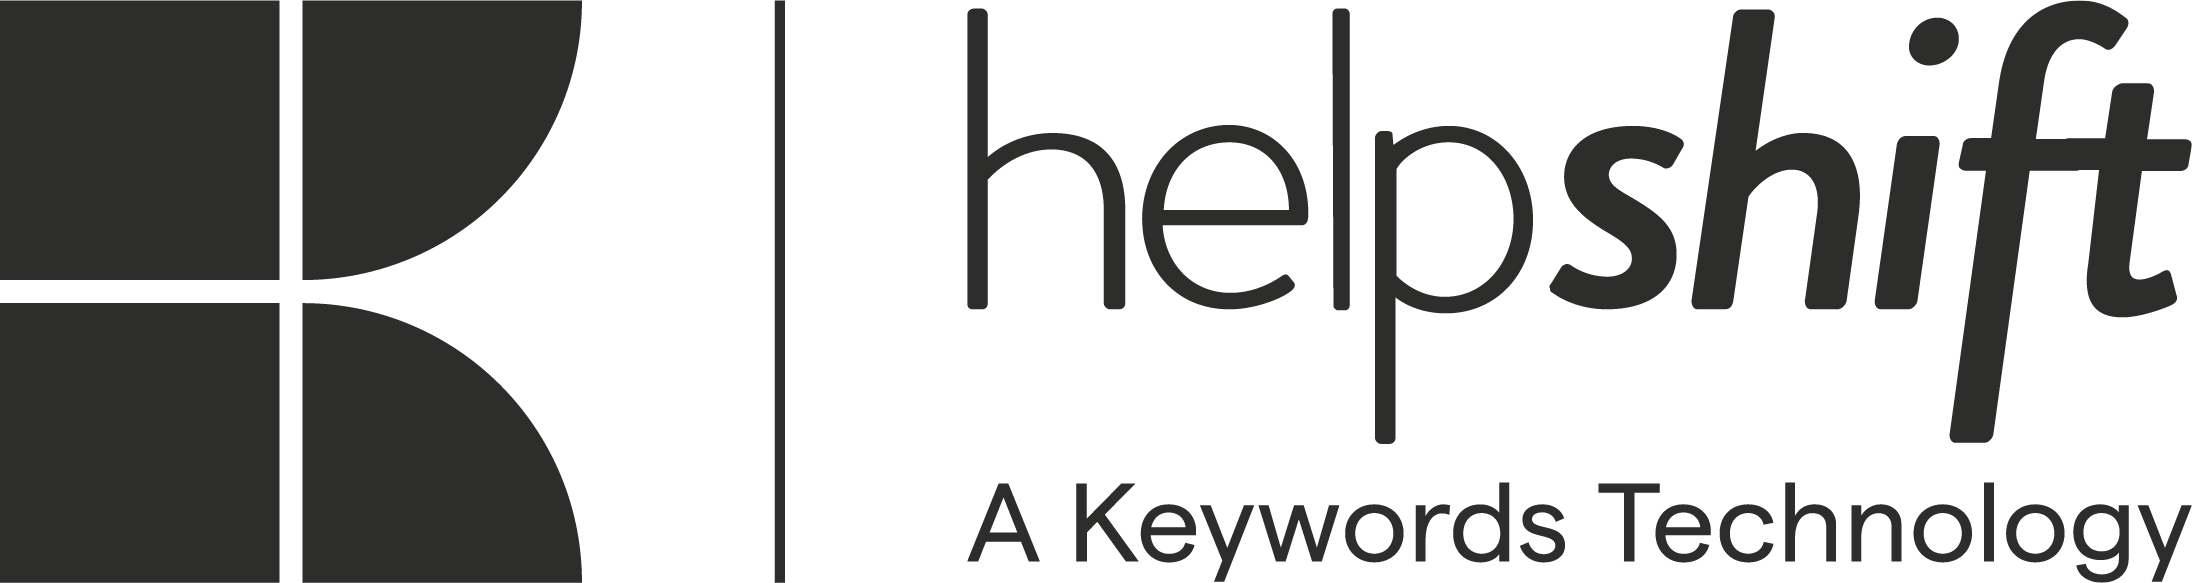 Helpshift A Keywords Technology